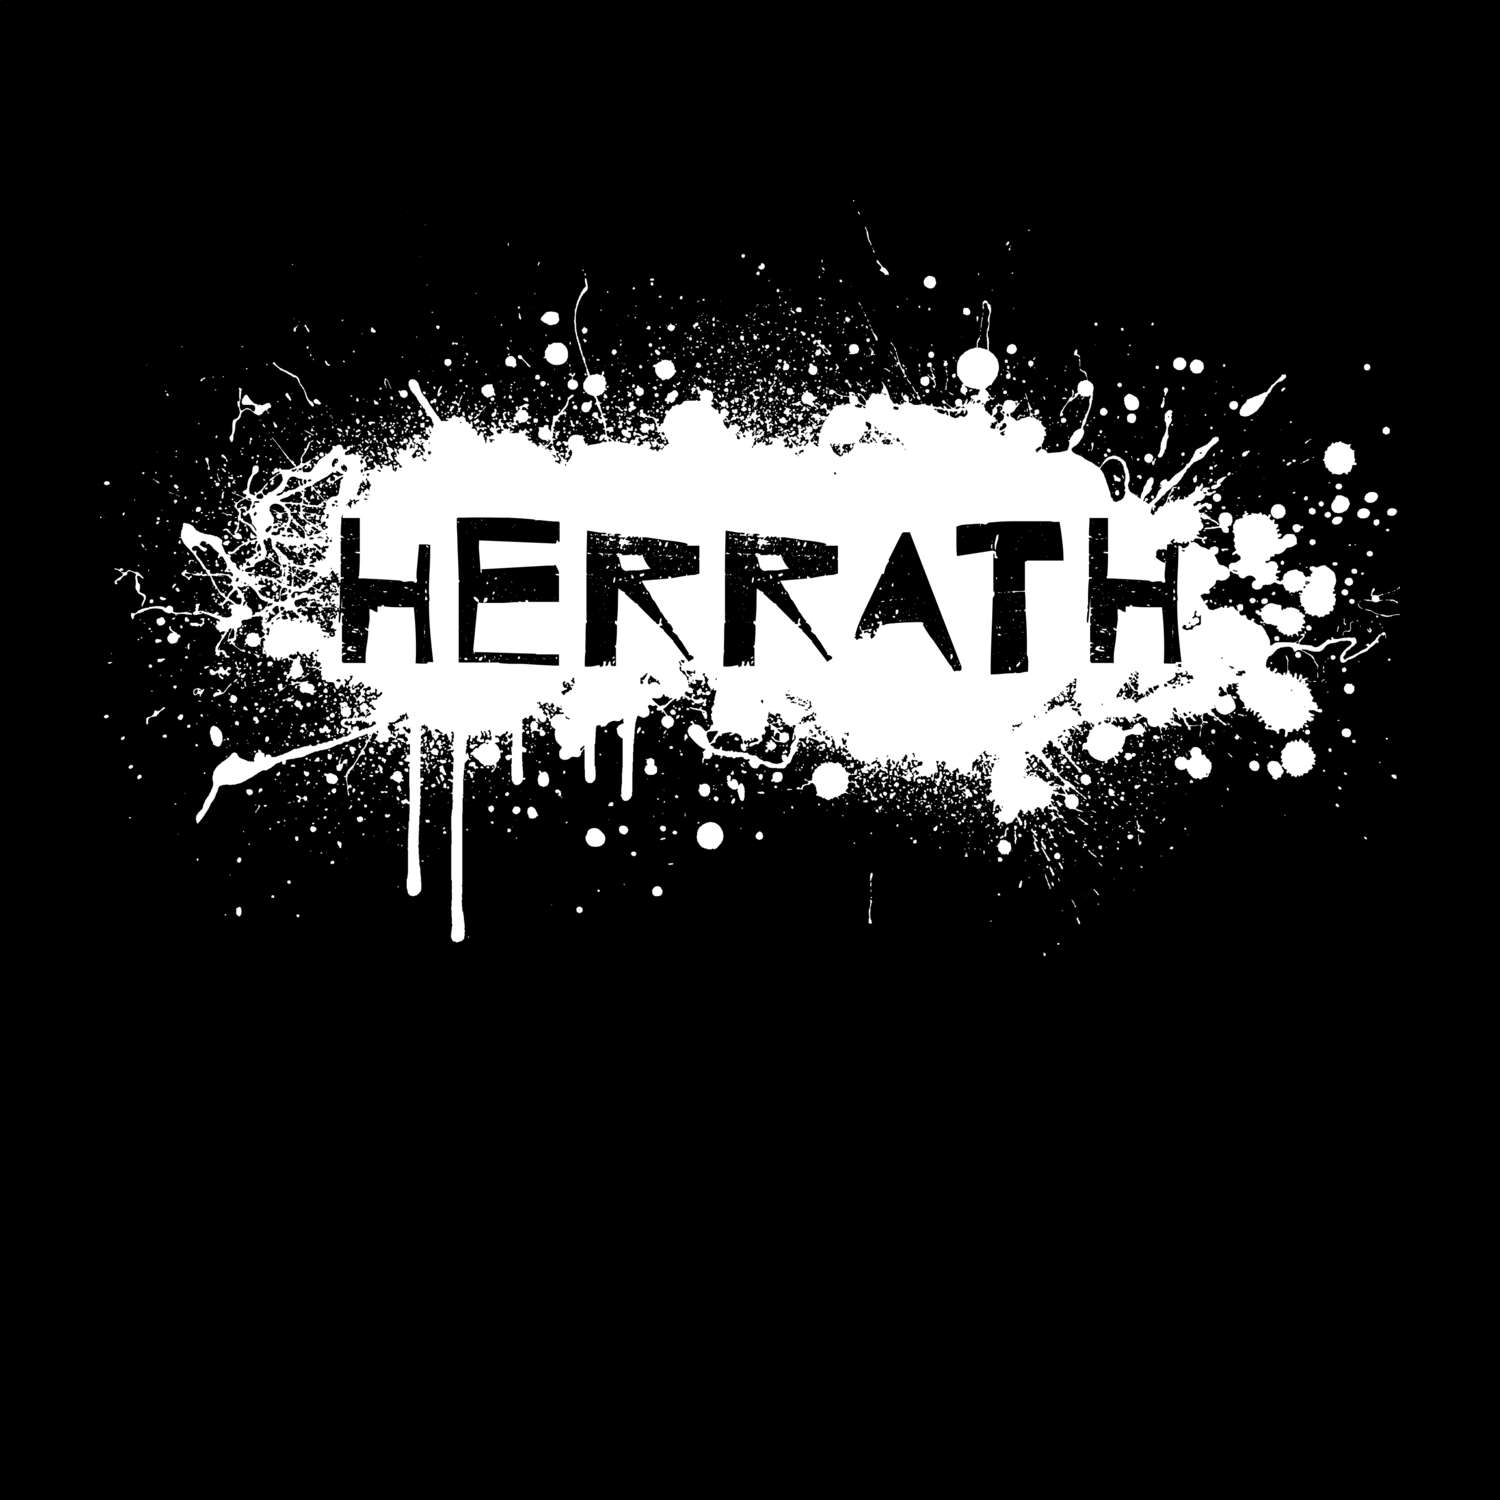 Herrath T-Shirt »Paint Splash Punk«